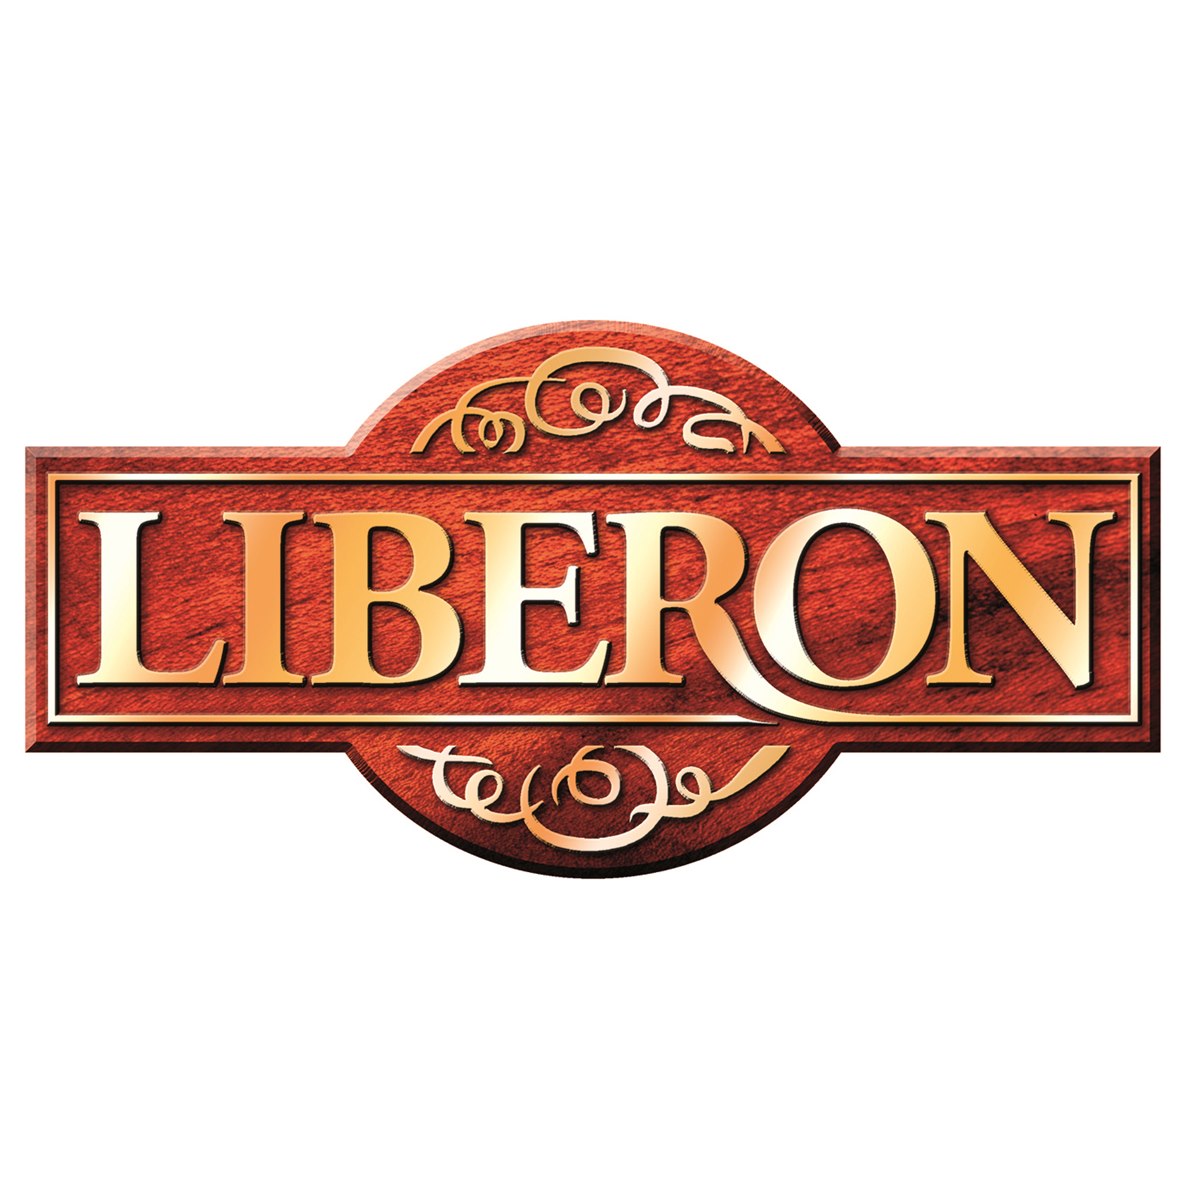 Liberon Wood Floor Care Products